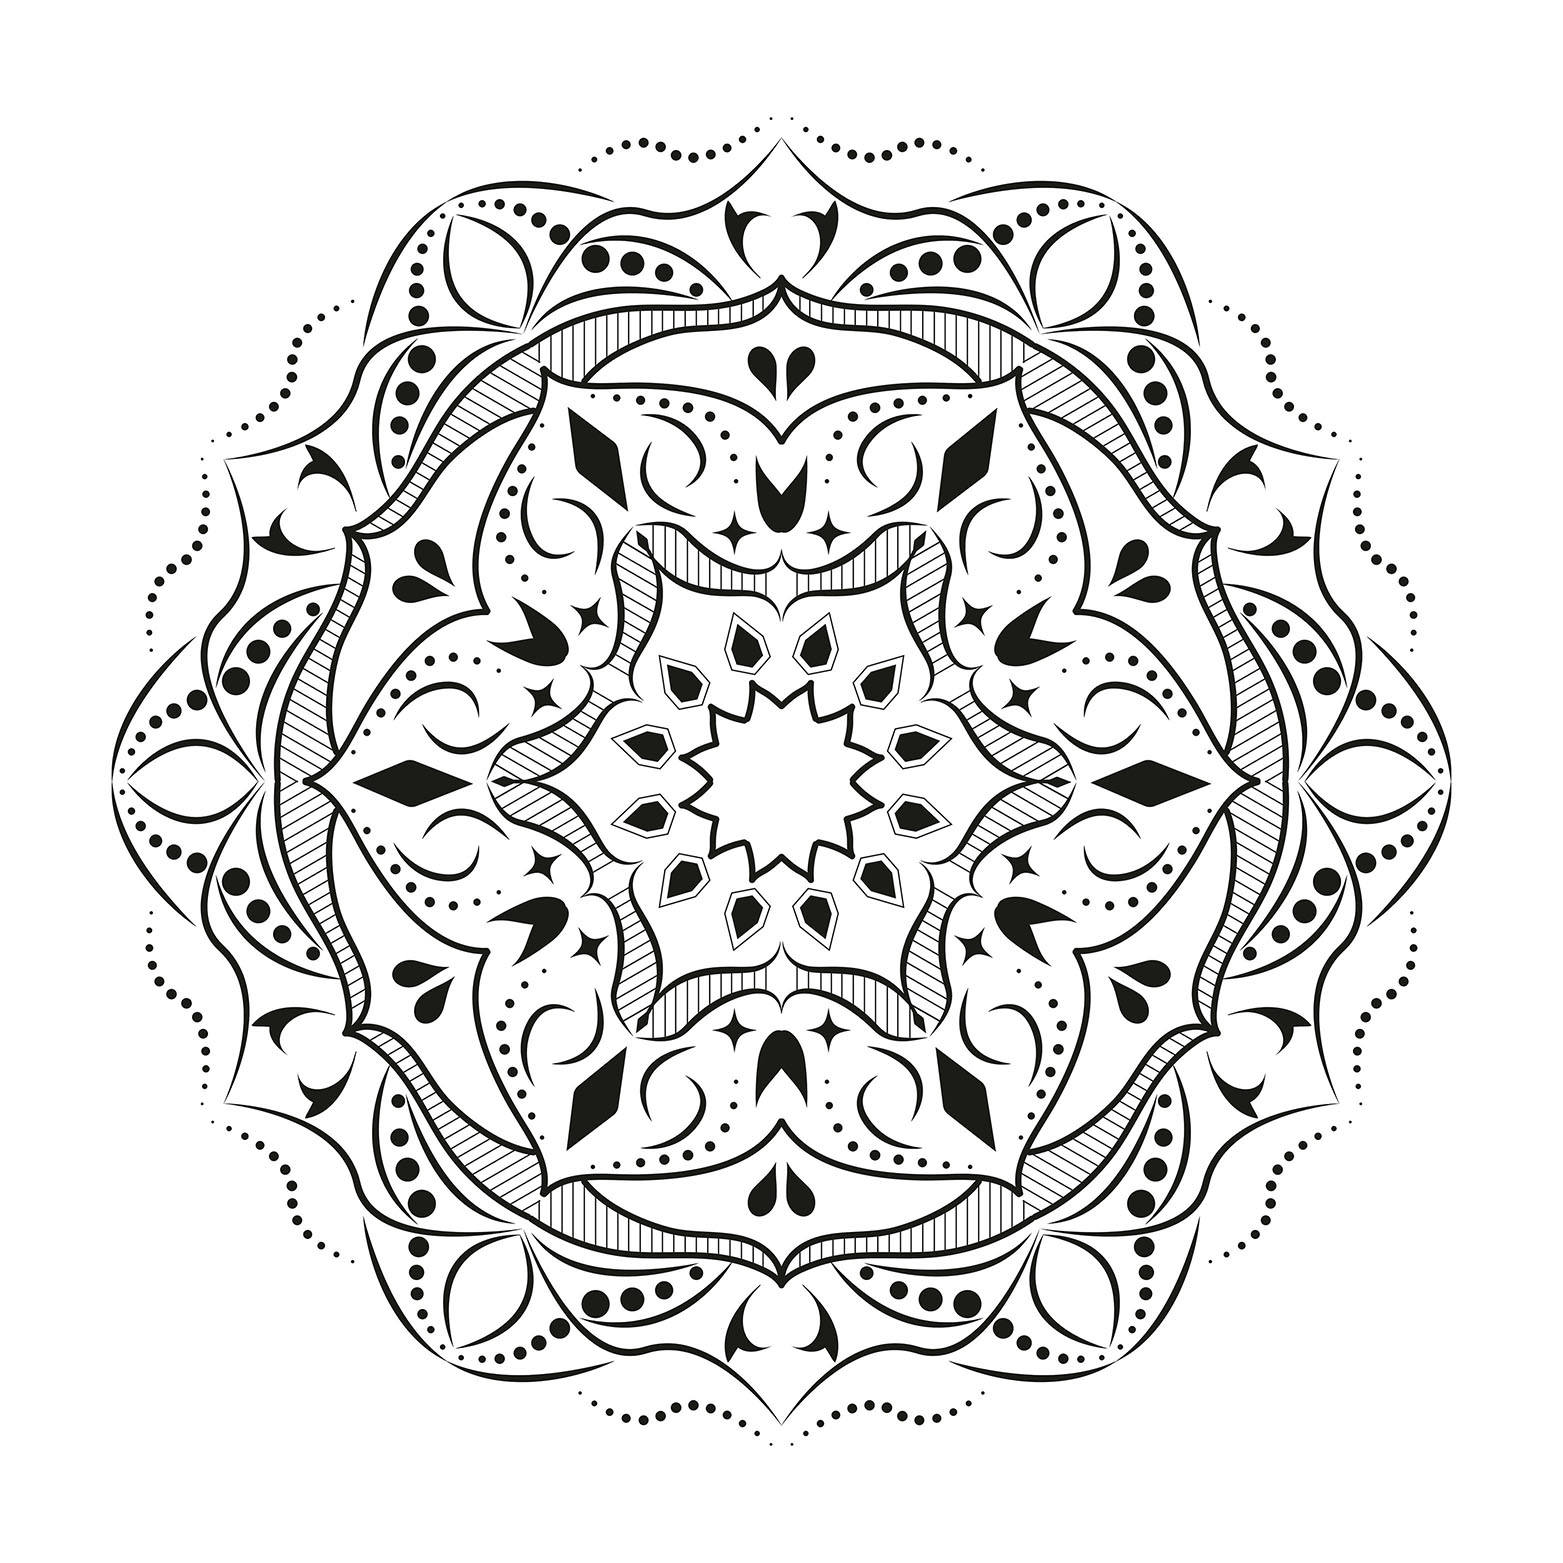 vector art work of mandala black and white pattern 2 2 3000x3000 px copy copy min 932